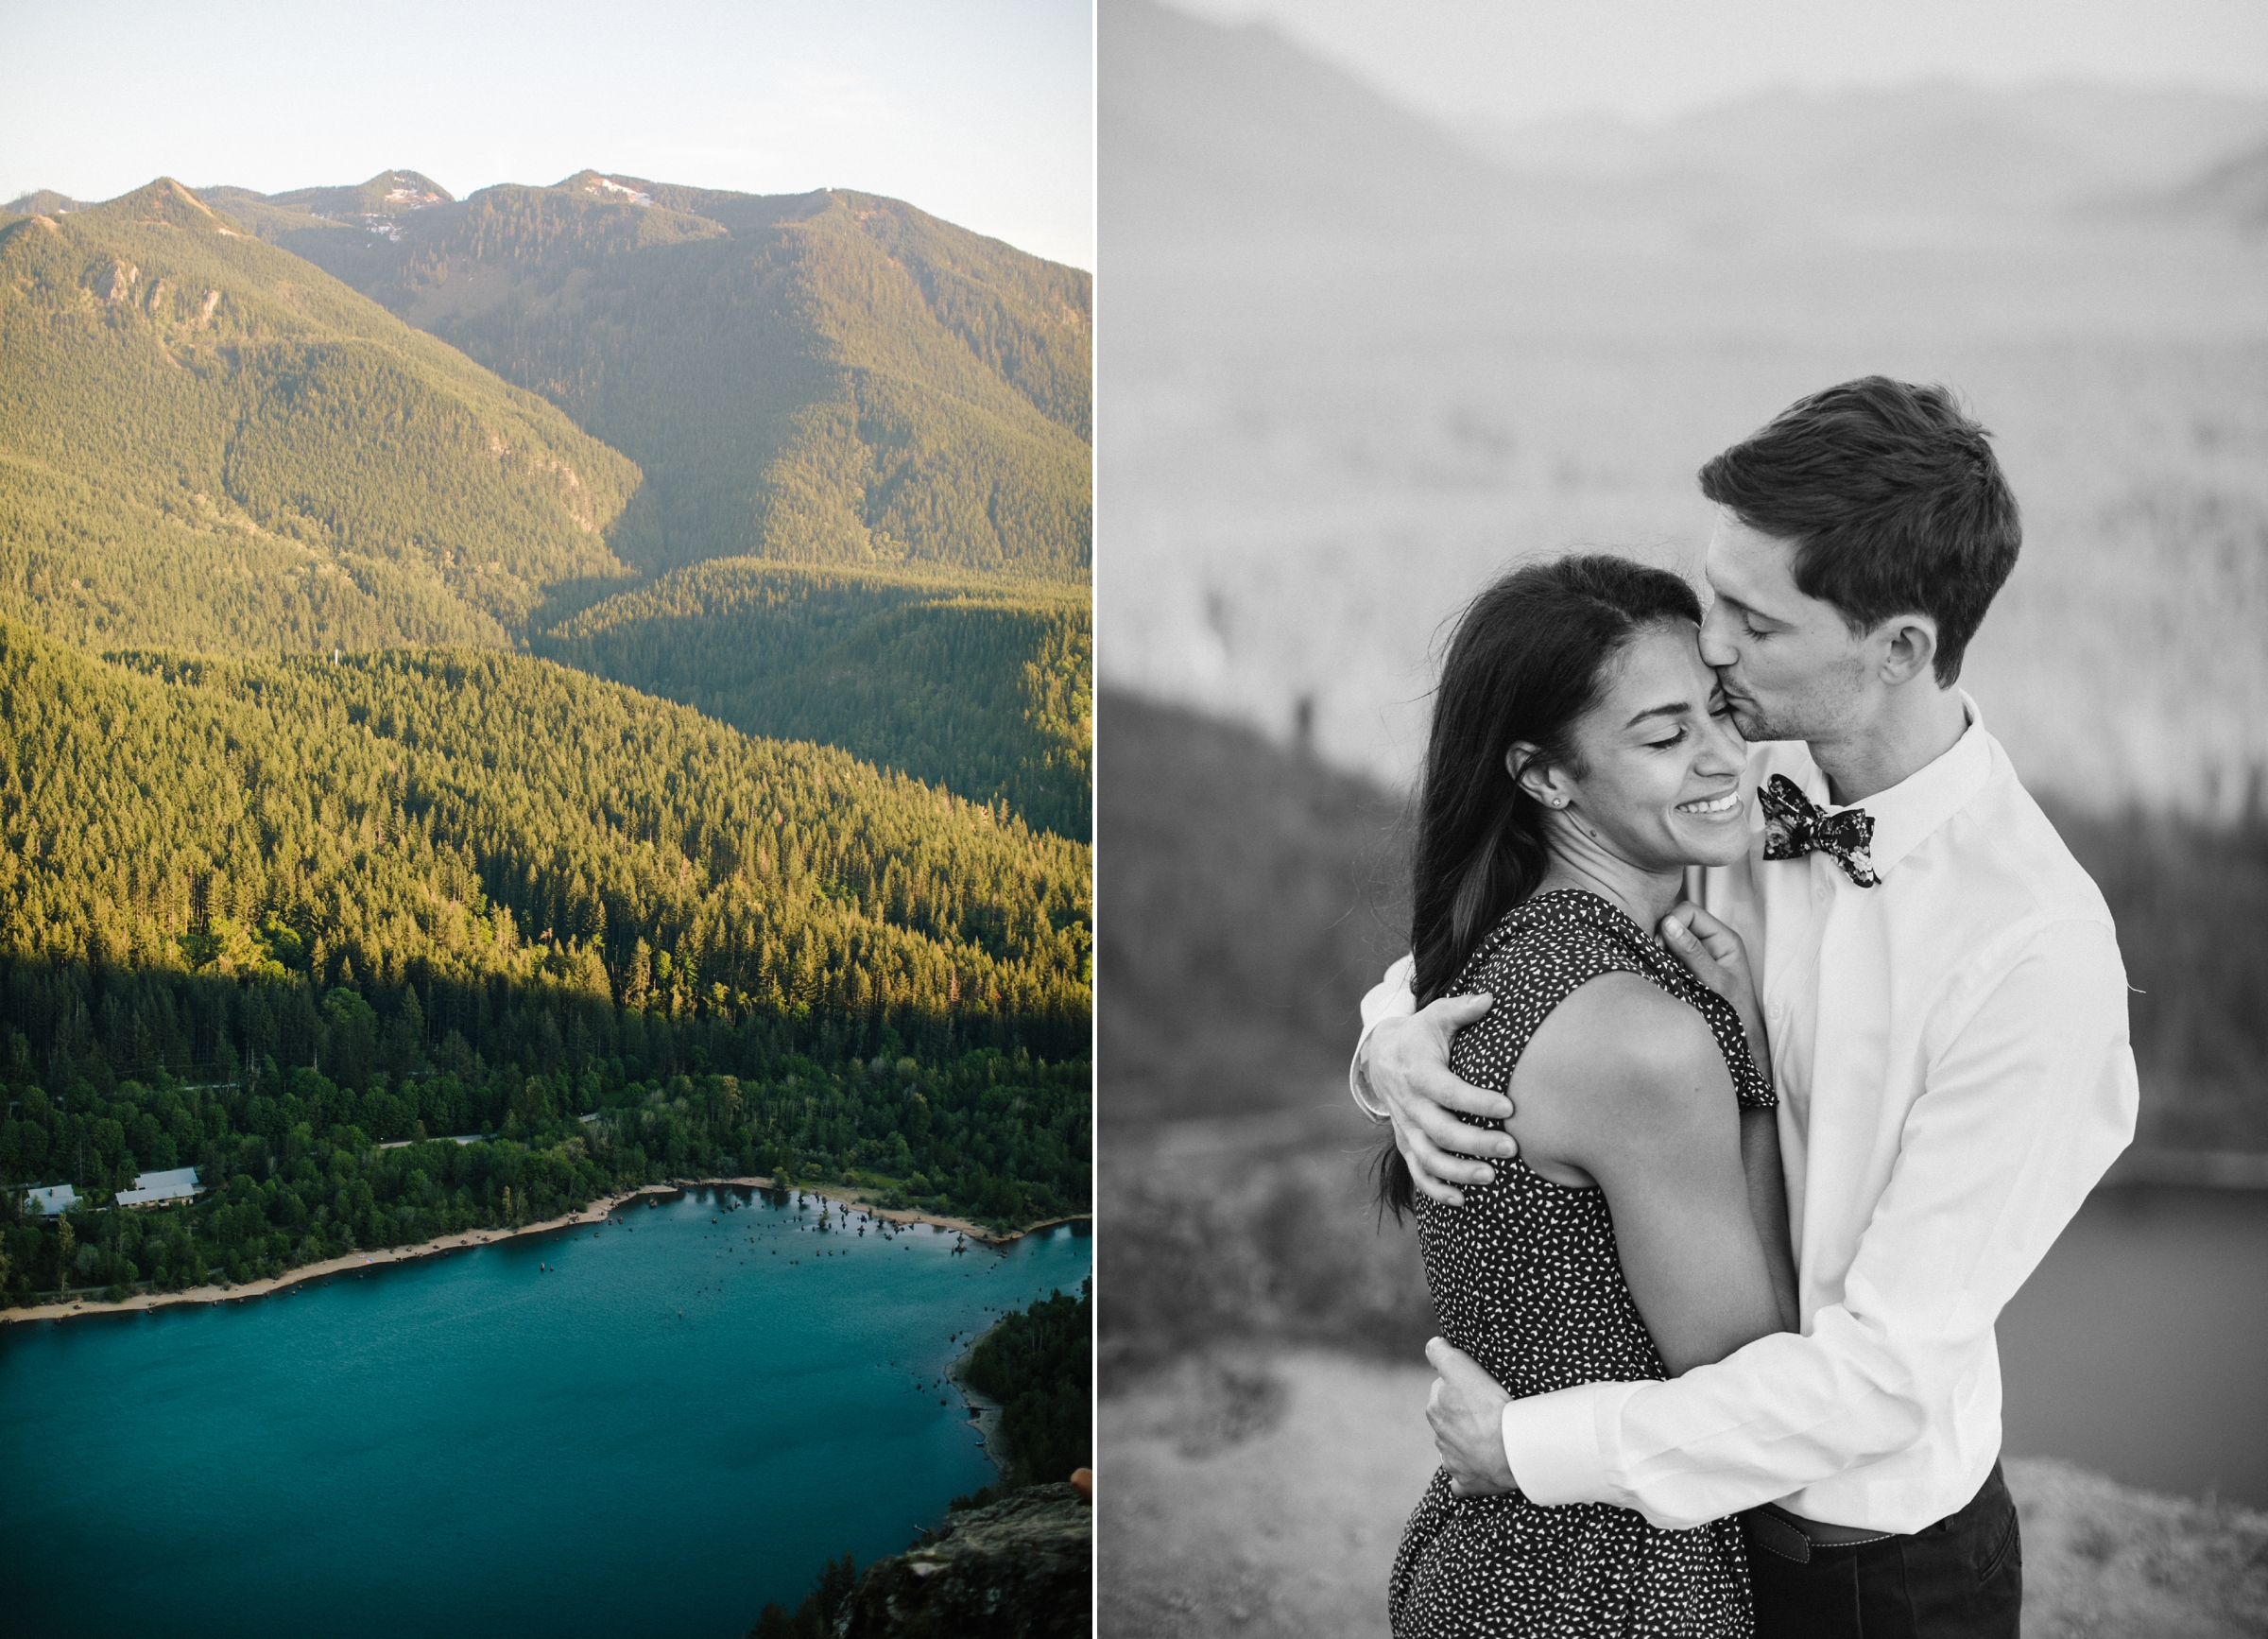 adventure-mountain-top-elopement-photographer-pnw-seattle-washington-wedding-engagement-hike-photography-catie-bergman_0008.jpg